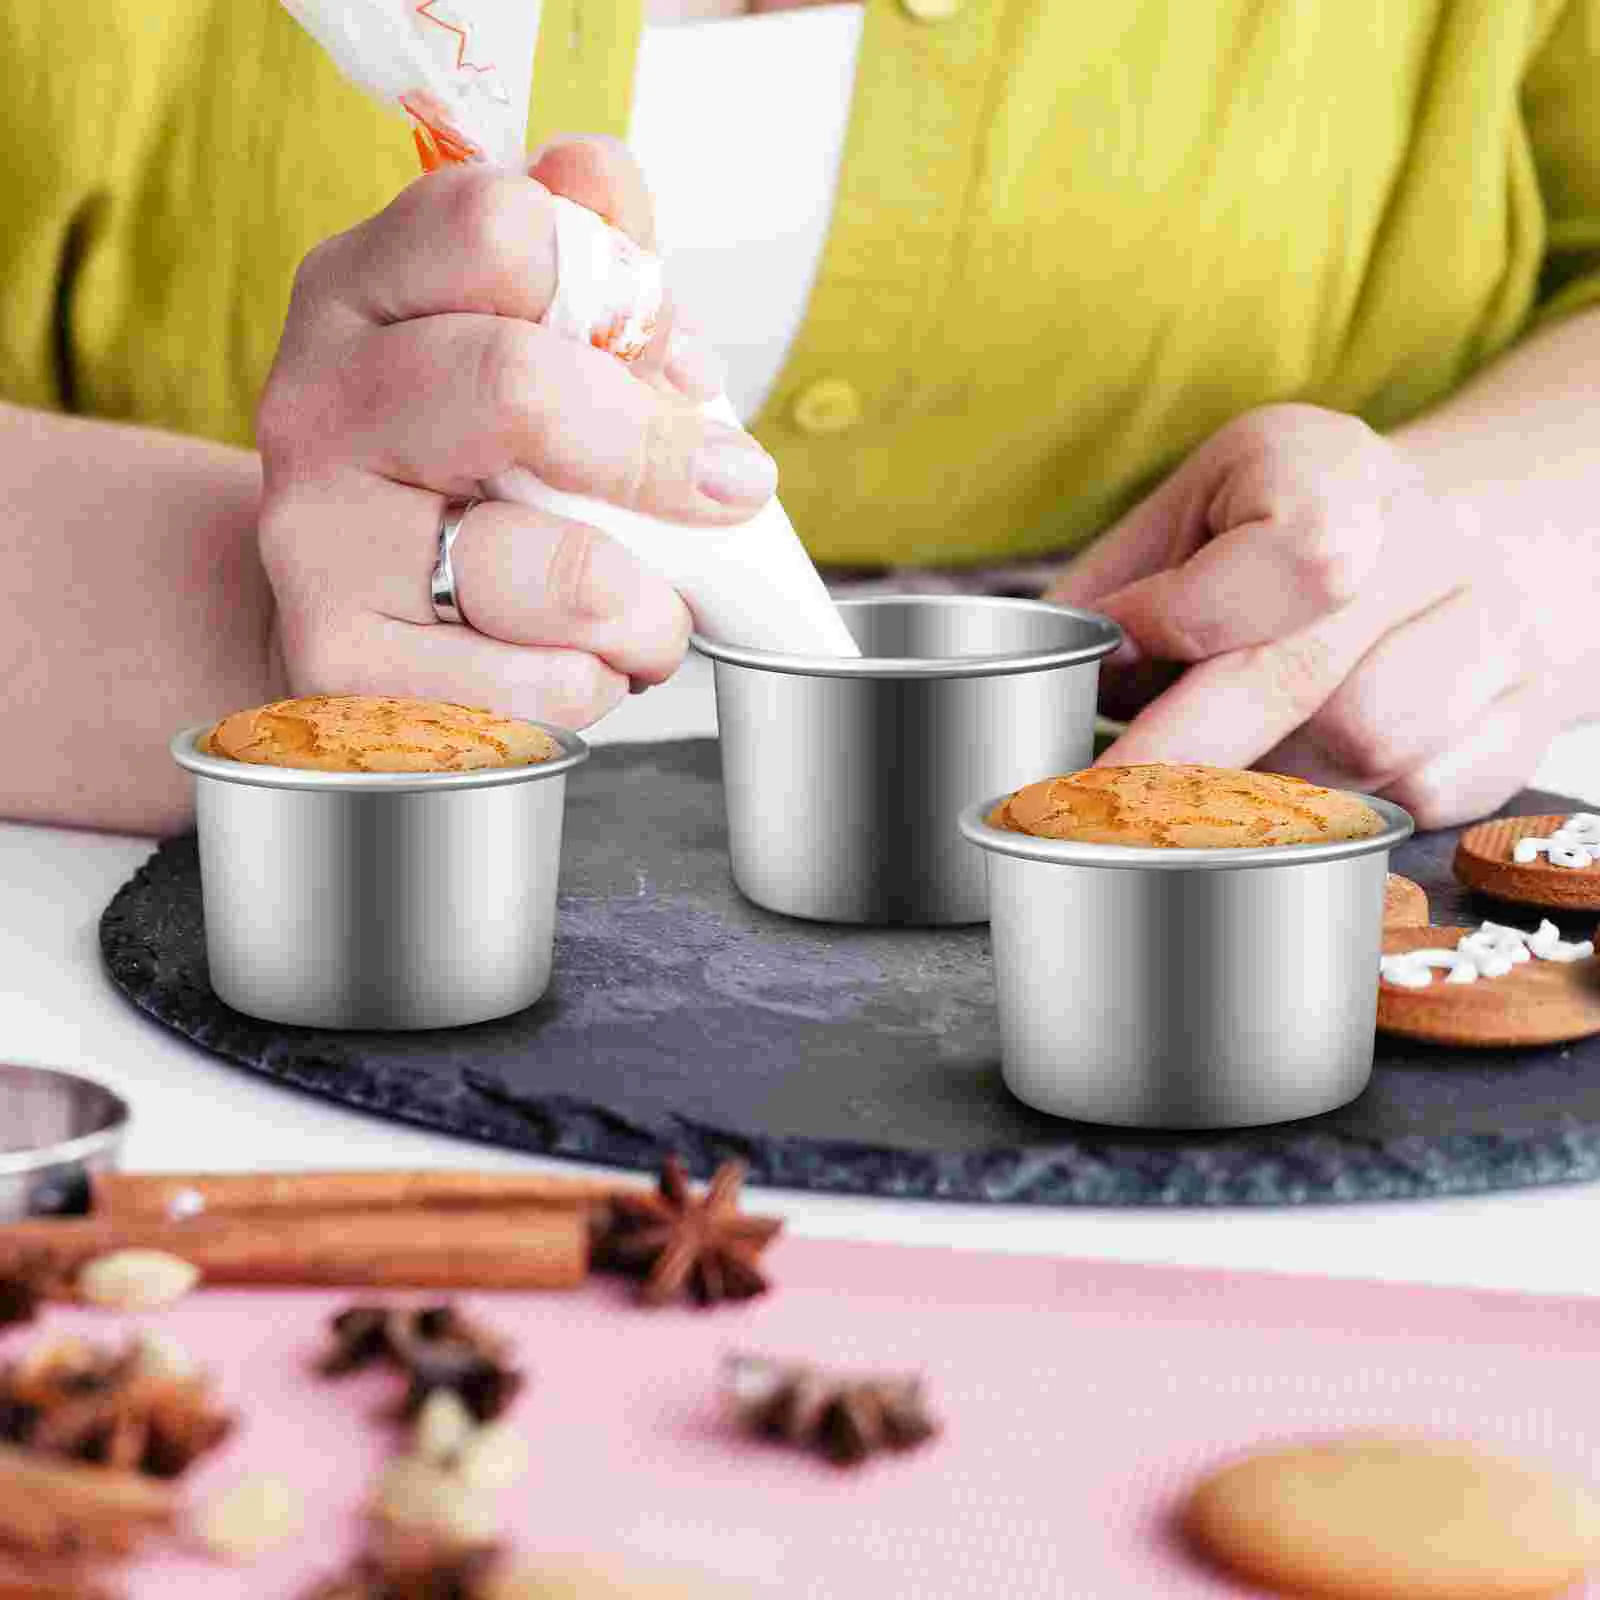 4 Peças Do Molde Do Bolo Assadeira De Fundo Removível Redonda Pequenas Latas Bakeware Da Liga De Alumínio De Mini Muffin